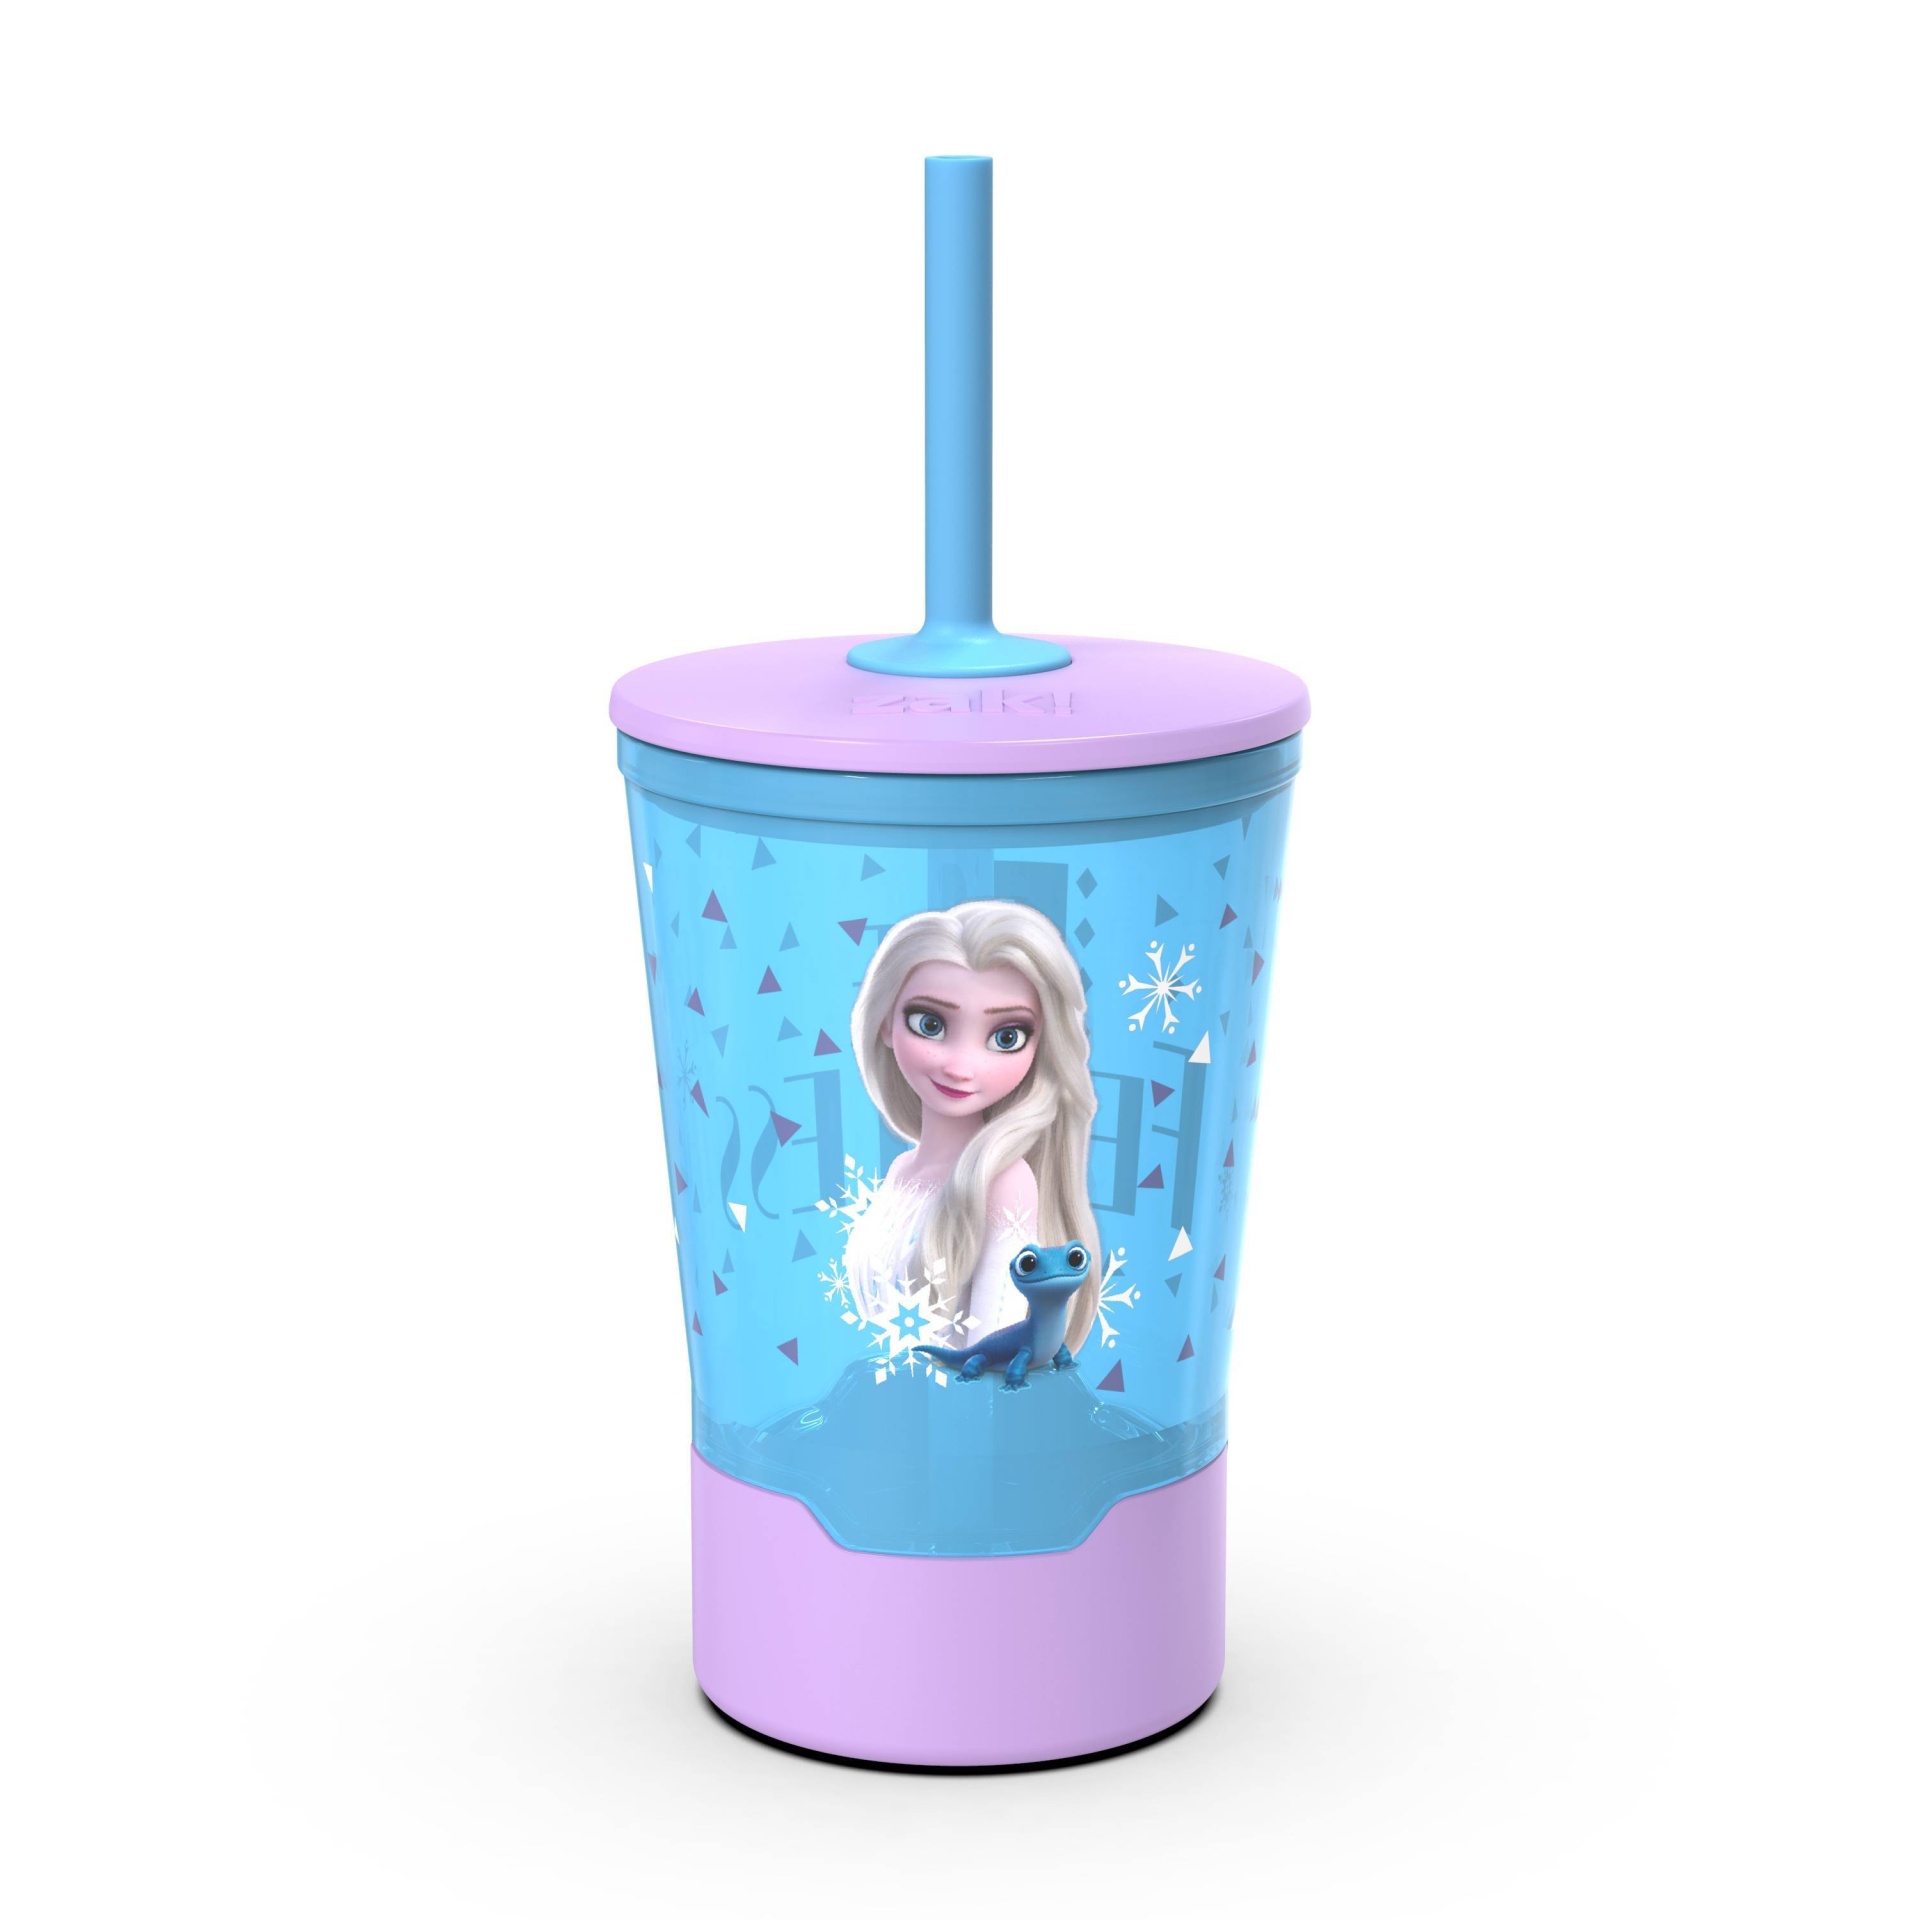 Frozen 2 Plastic Mighty Mug Kids Tumbler - Zak Designs 16 oz